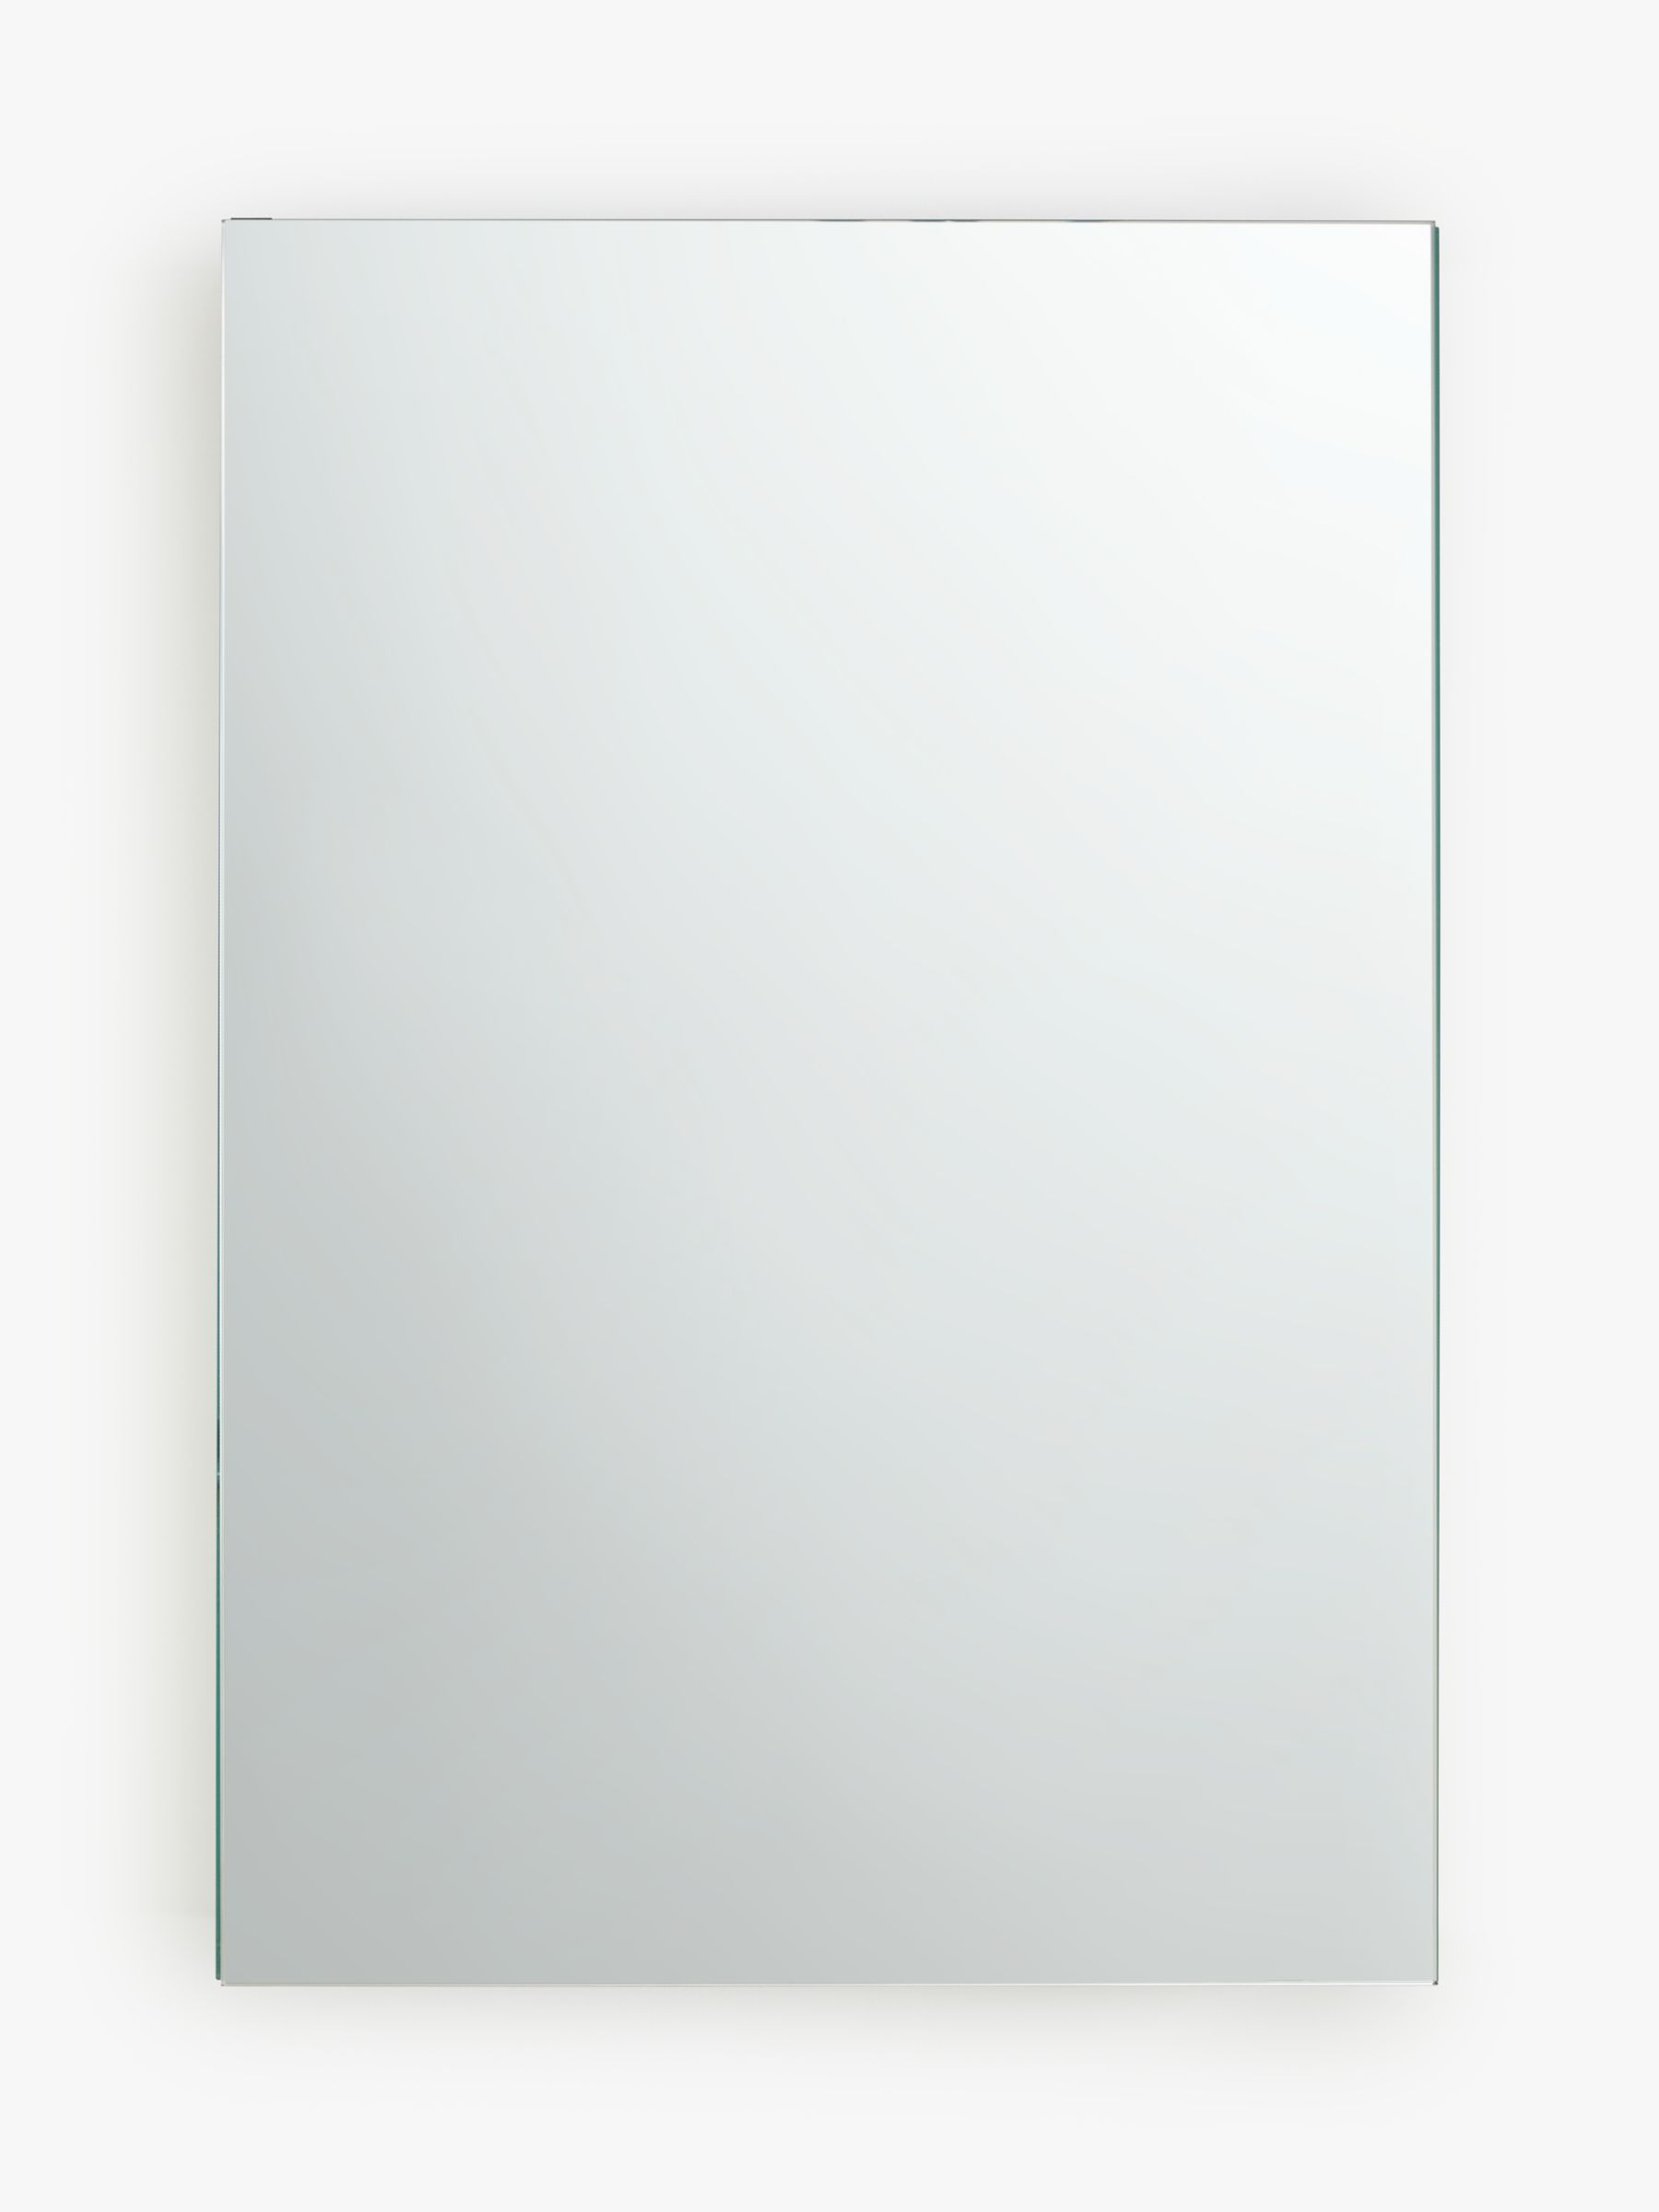 Photo of John lewis single mirror-sided bathroom cabinet